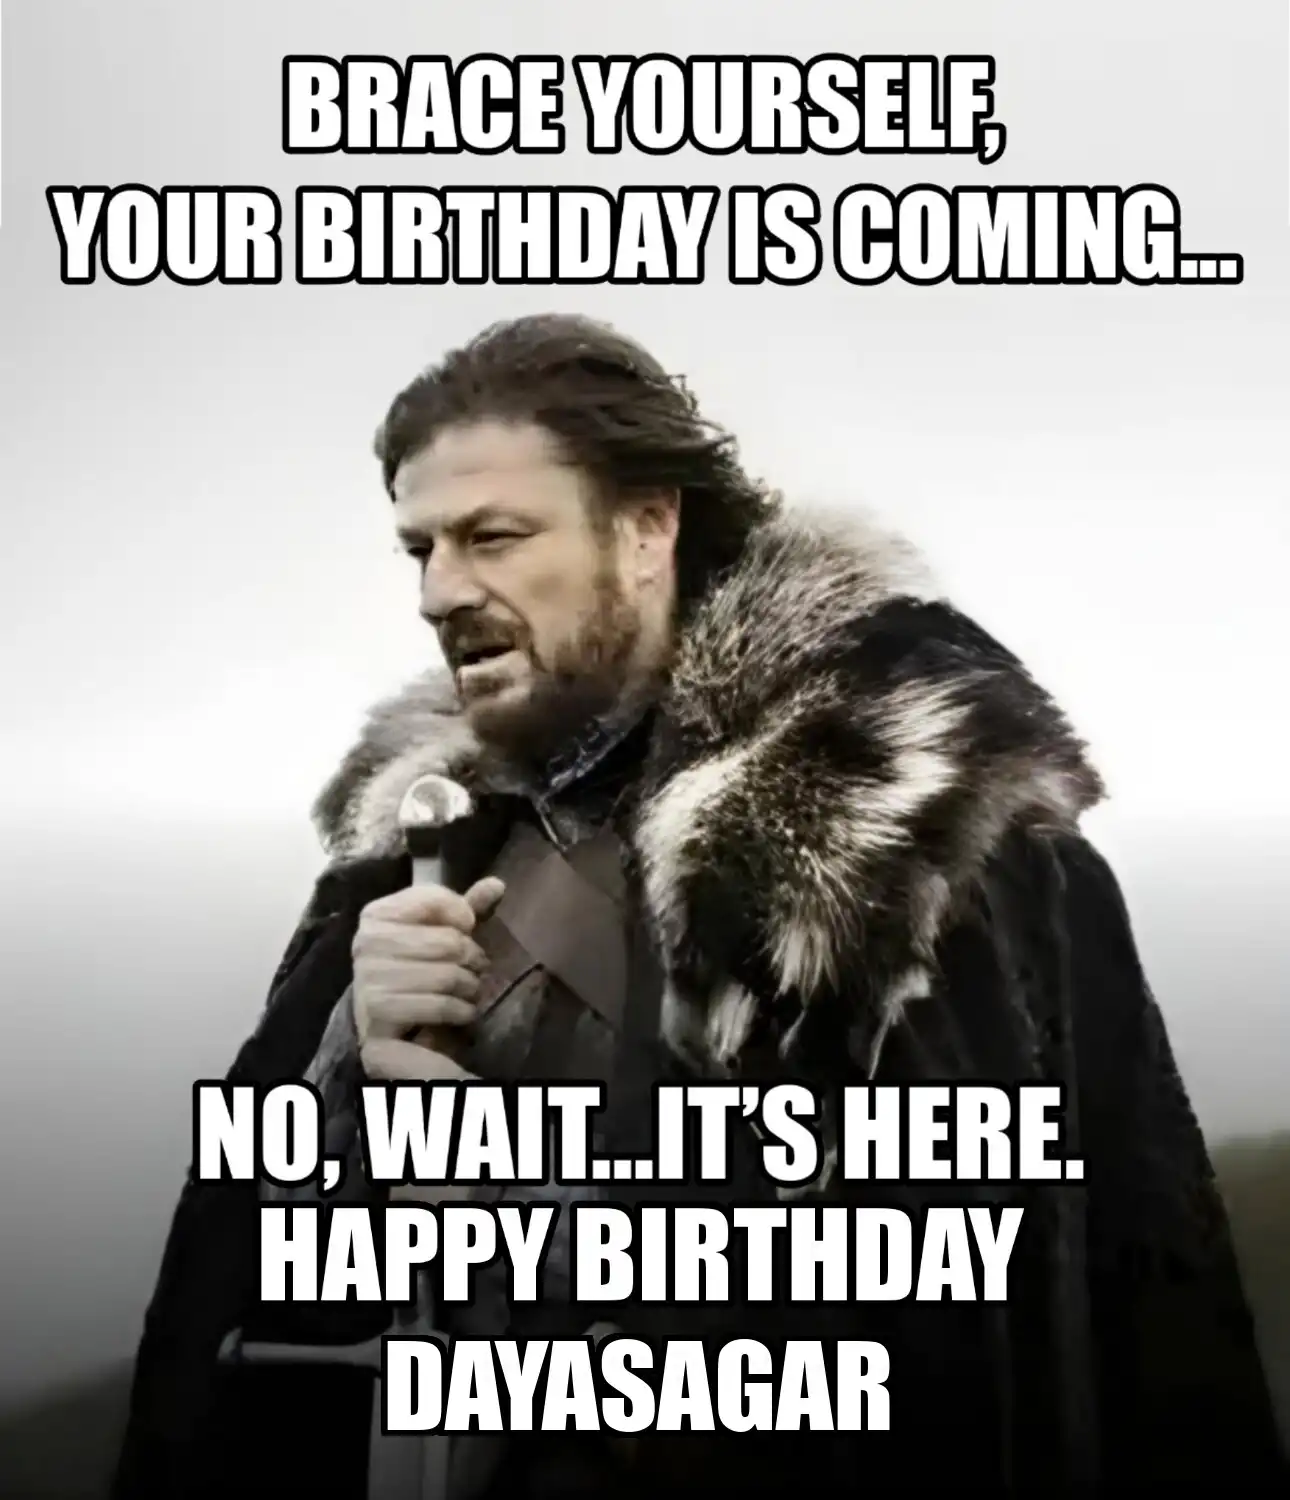 Happy Birthday Dayasagar Brace Yourself Your Birthday Is Coming Meme